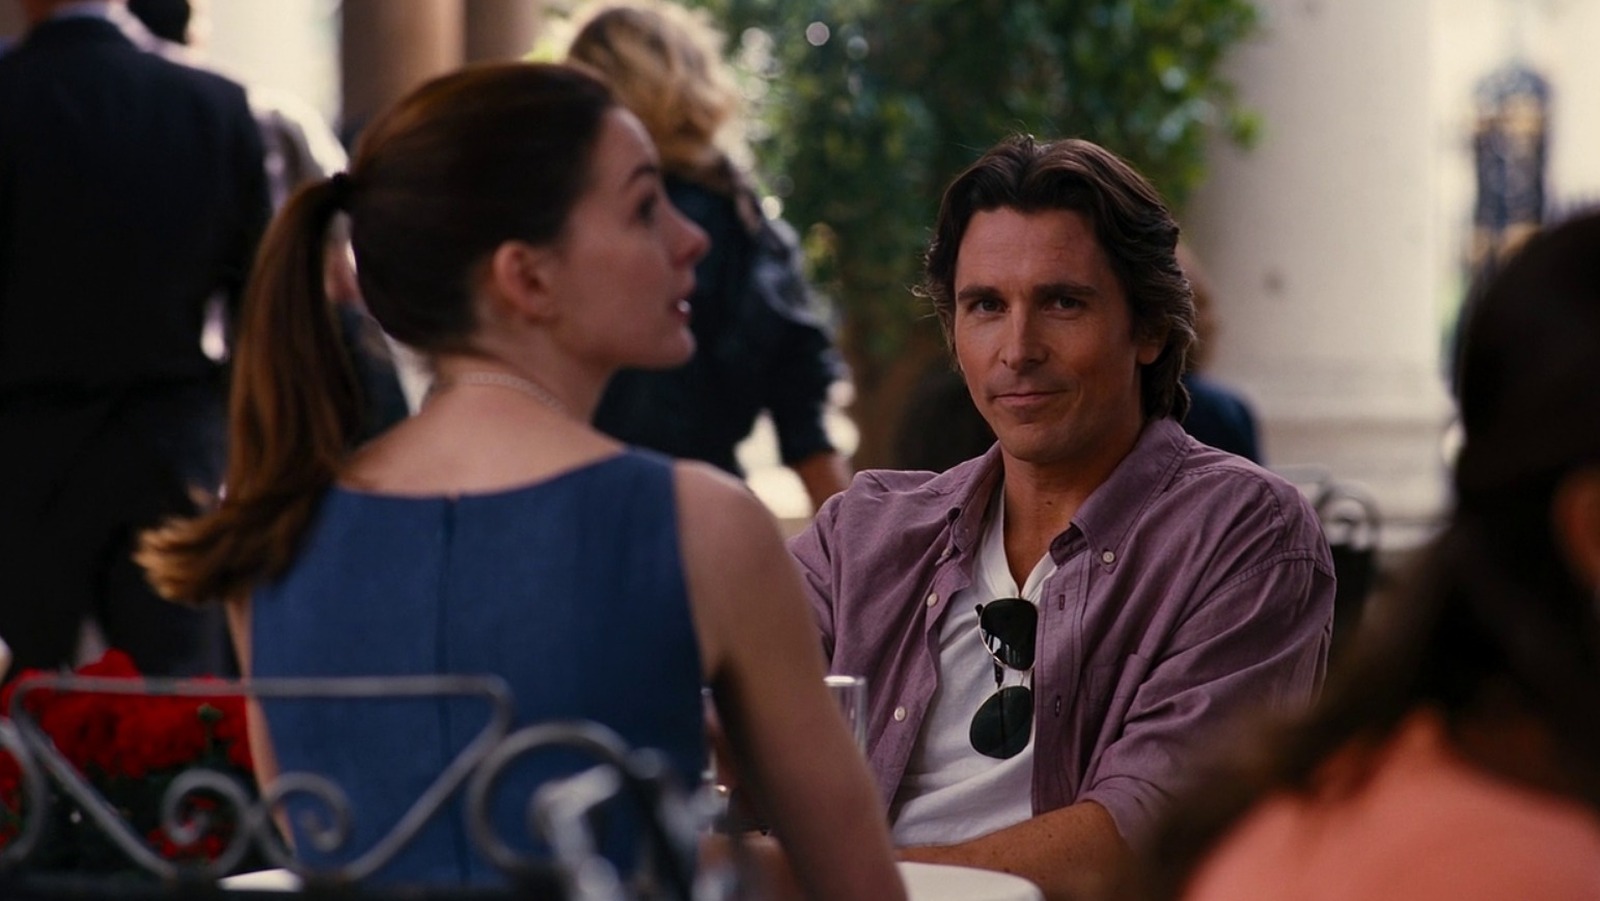 Listen: 'The Dark Knight Rises' Ending Explained By Christian Bale